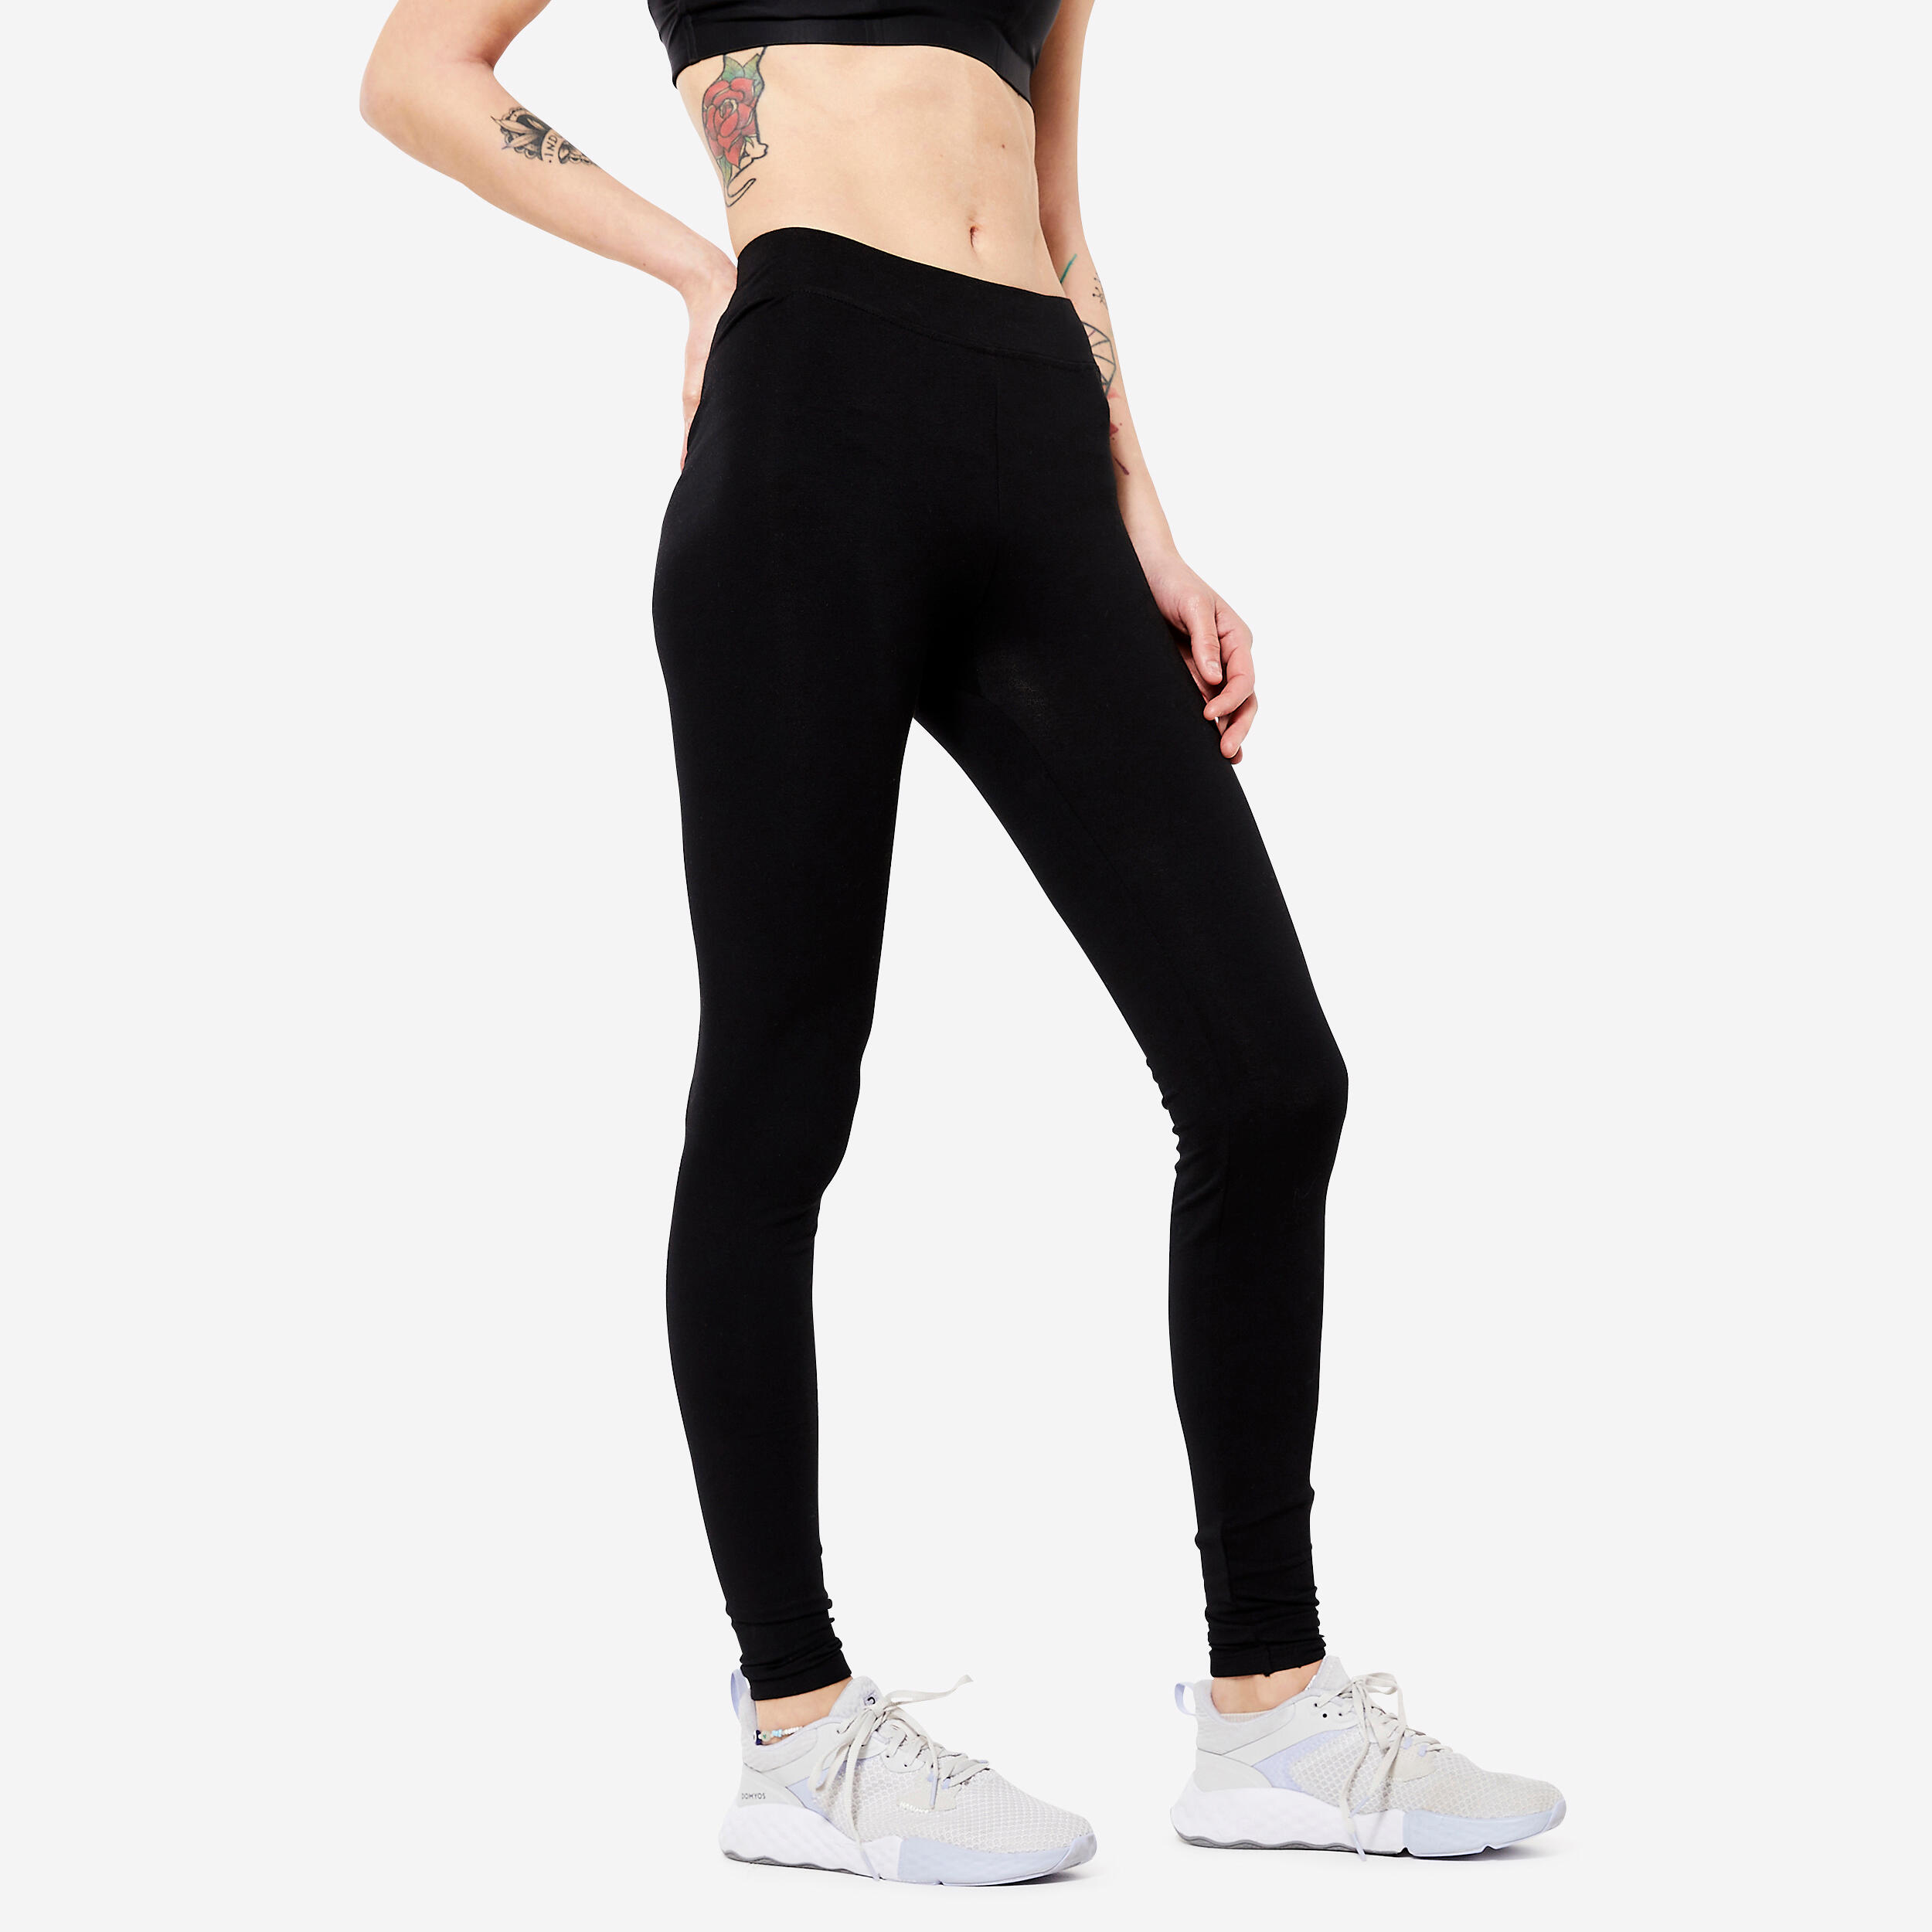 Women's Slim-Fit Fitness Leggings Fit+ 500 - Black 4/4